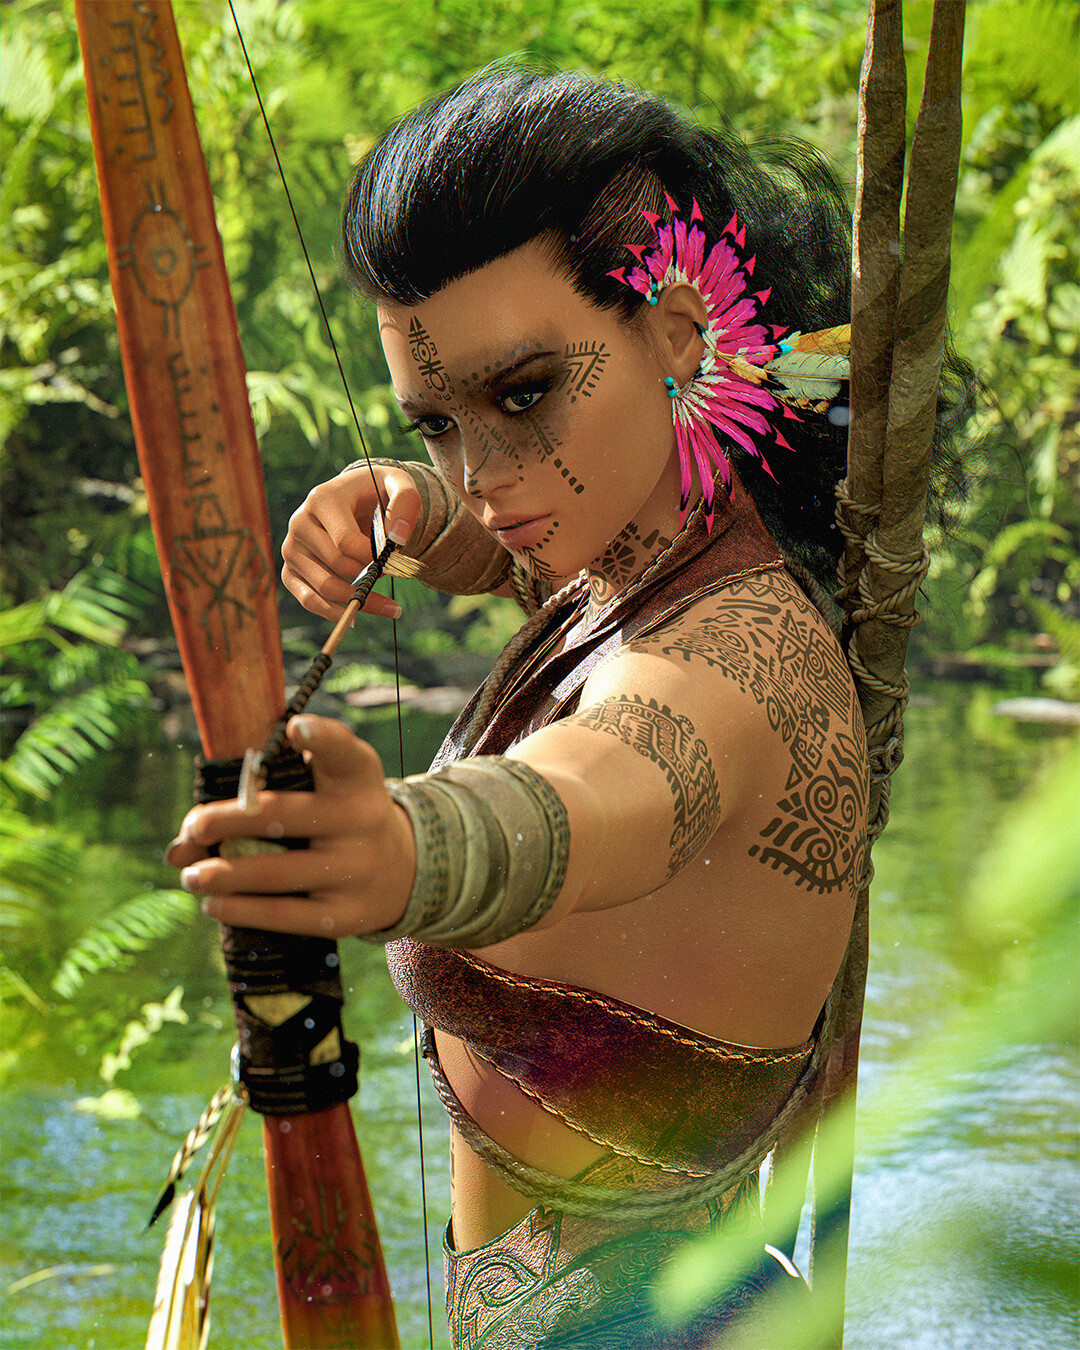 The Amazon Warrior